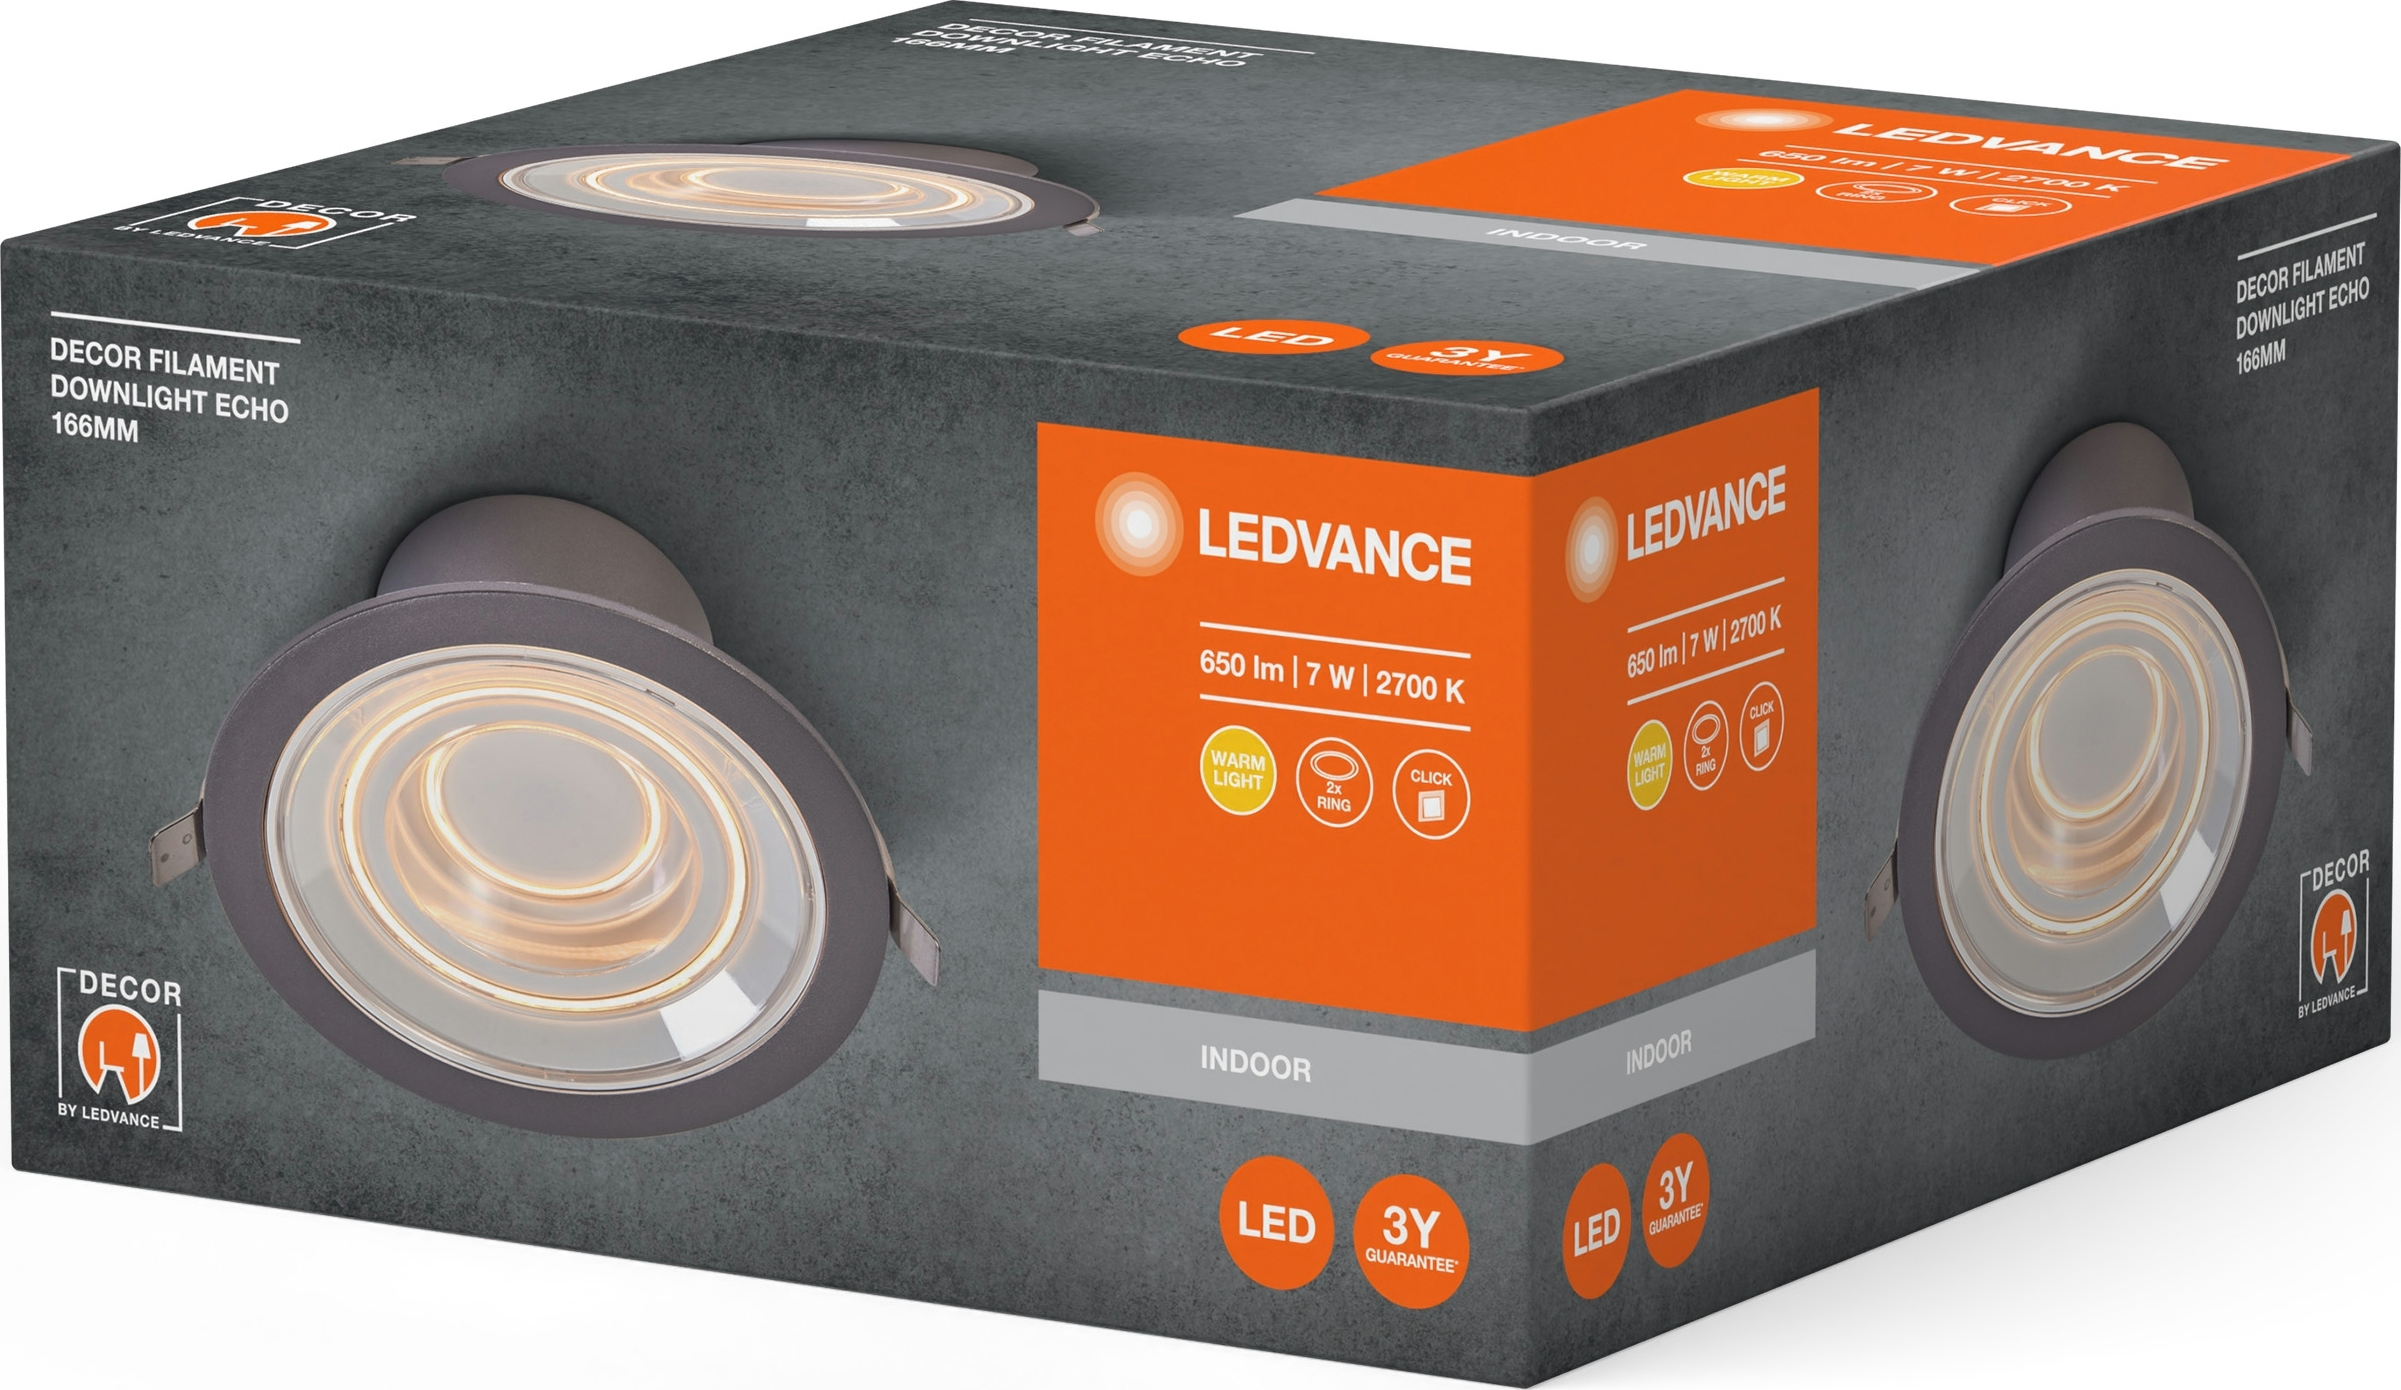 Світильник даунлайт Ledvance LED 7Вт 650Лм 2700K 166мм Decor Filament Downlight Echo (4058075833951)фото6